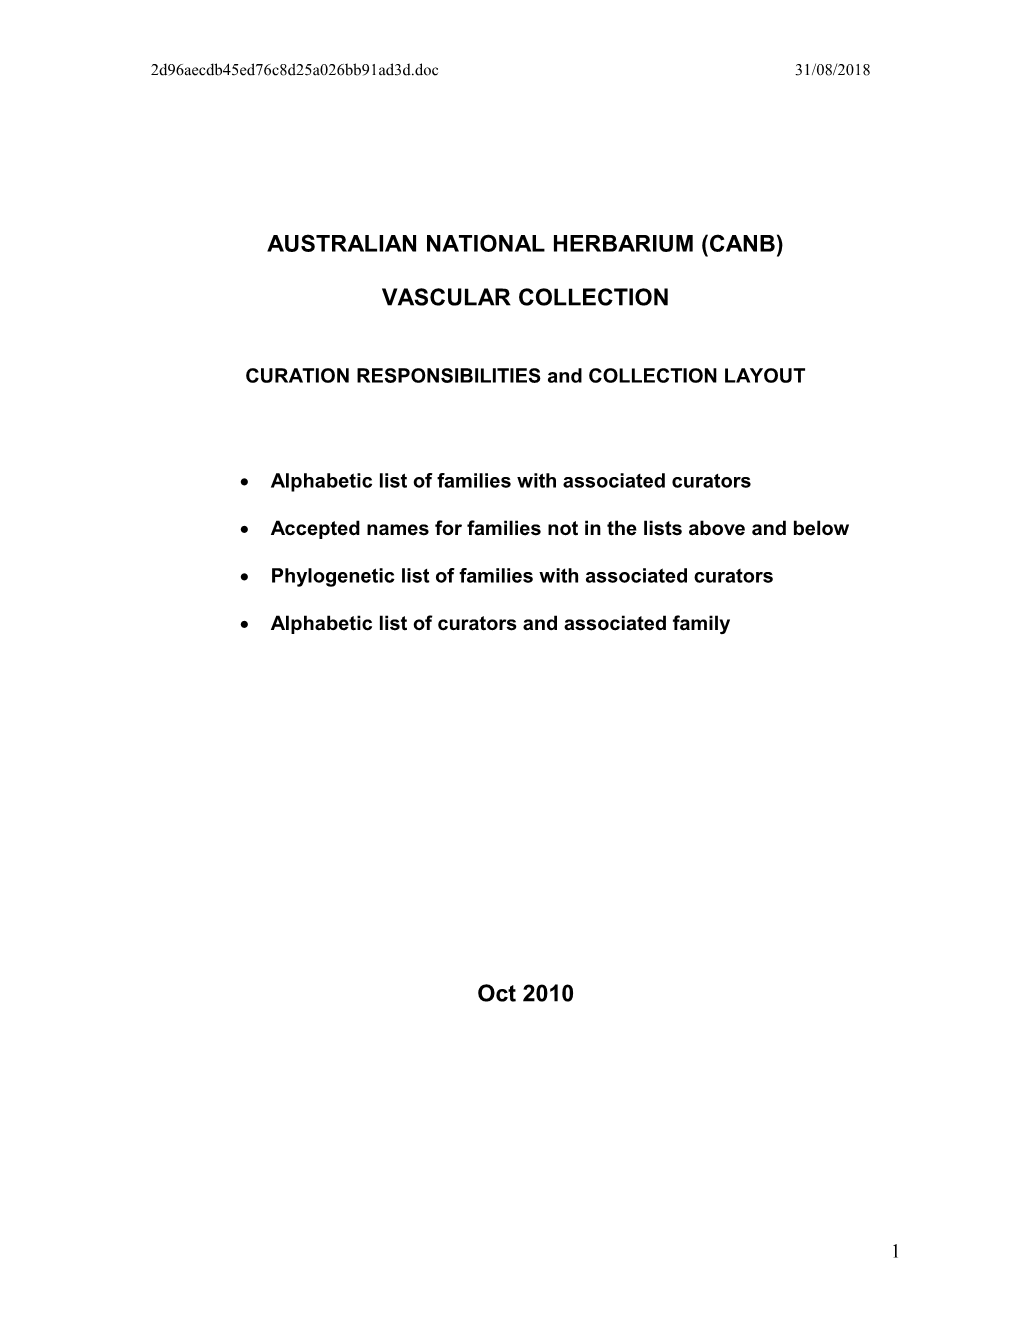 Australian National Herbarium